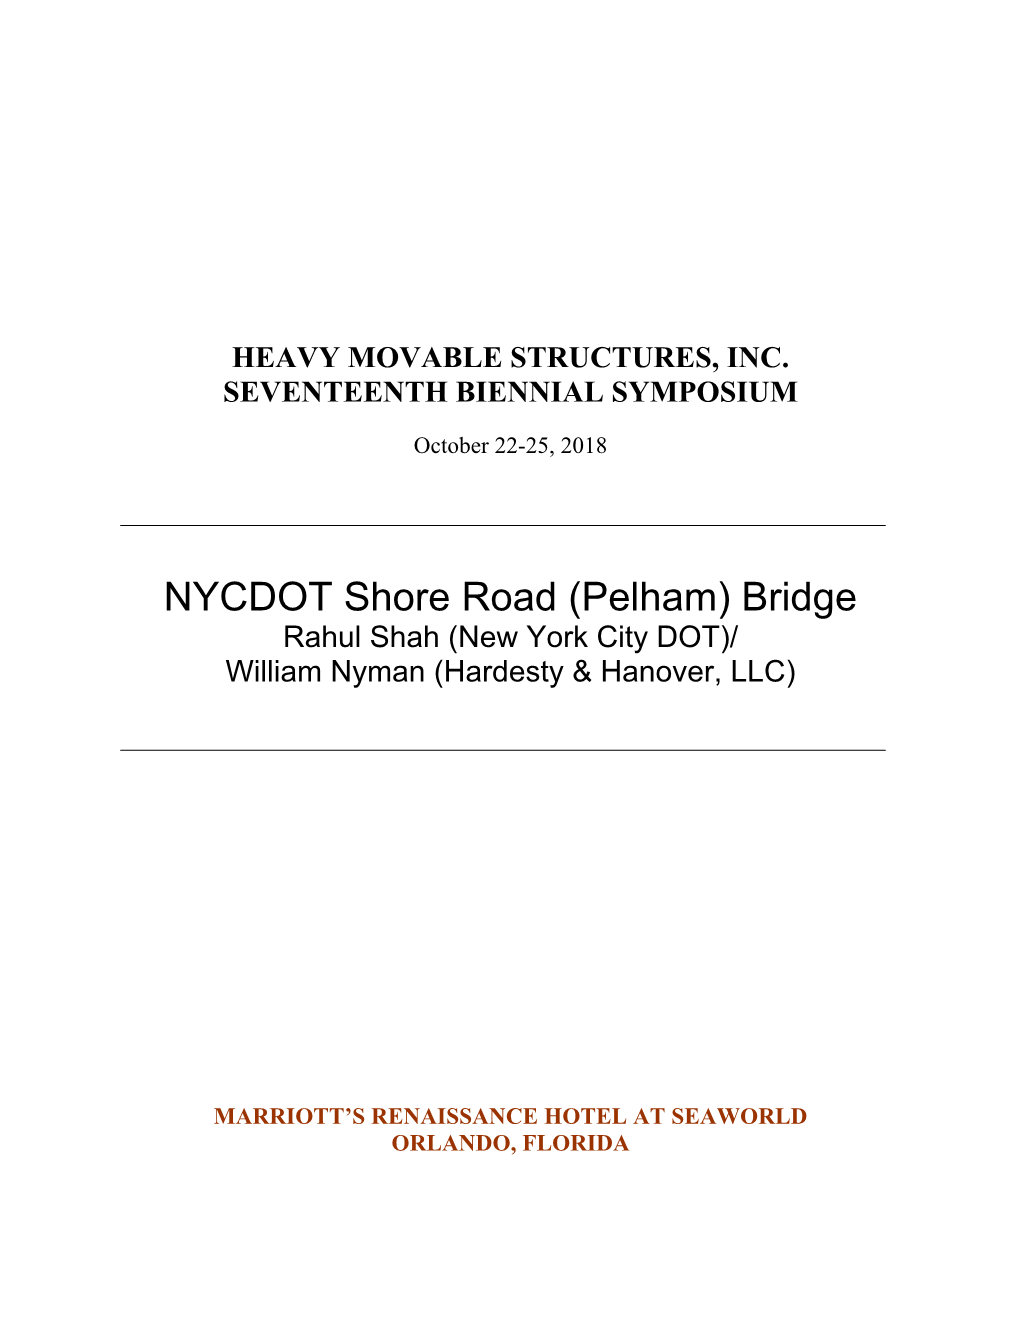 NYCDOT Shore Road (Pelham) Bridge Rahul Shah (New York City DOT)/ William Nyman (Hardesty & Hanover, LLC)